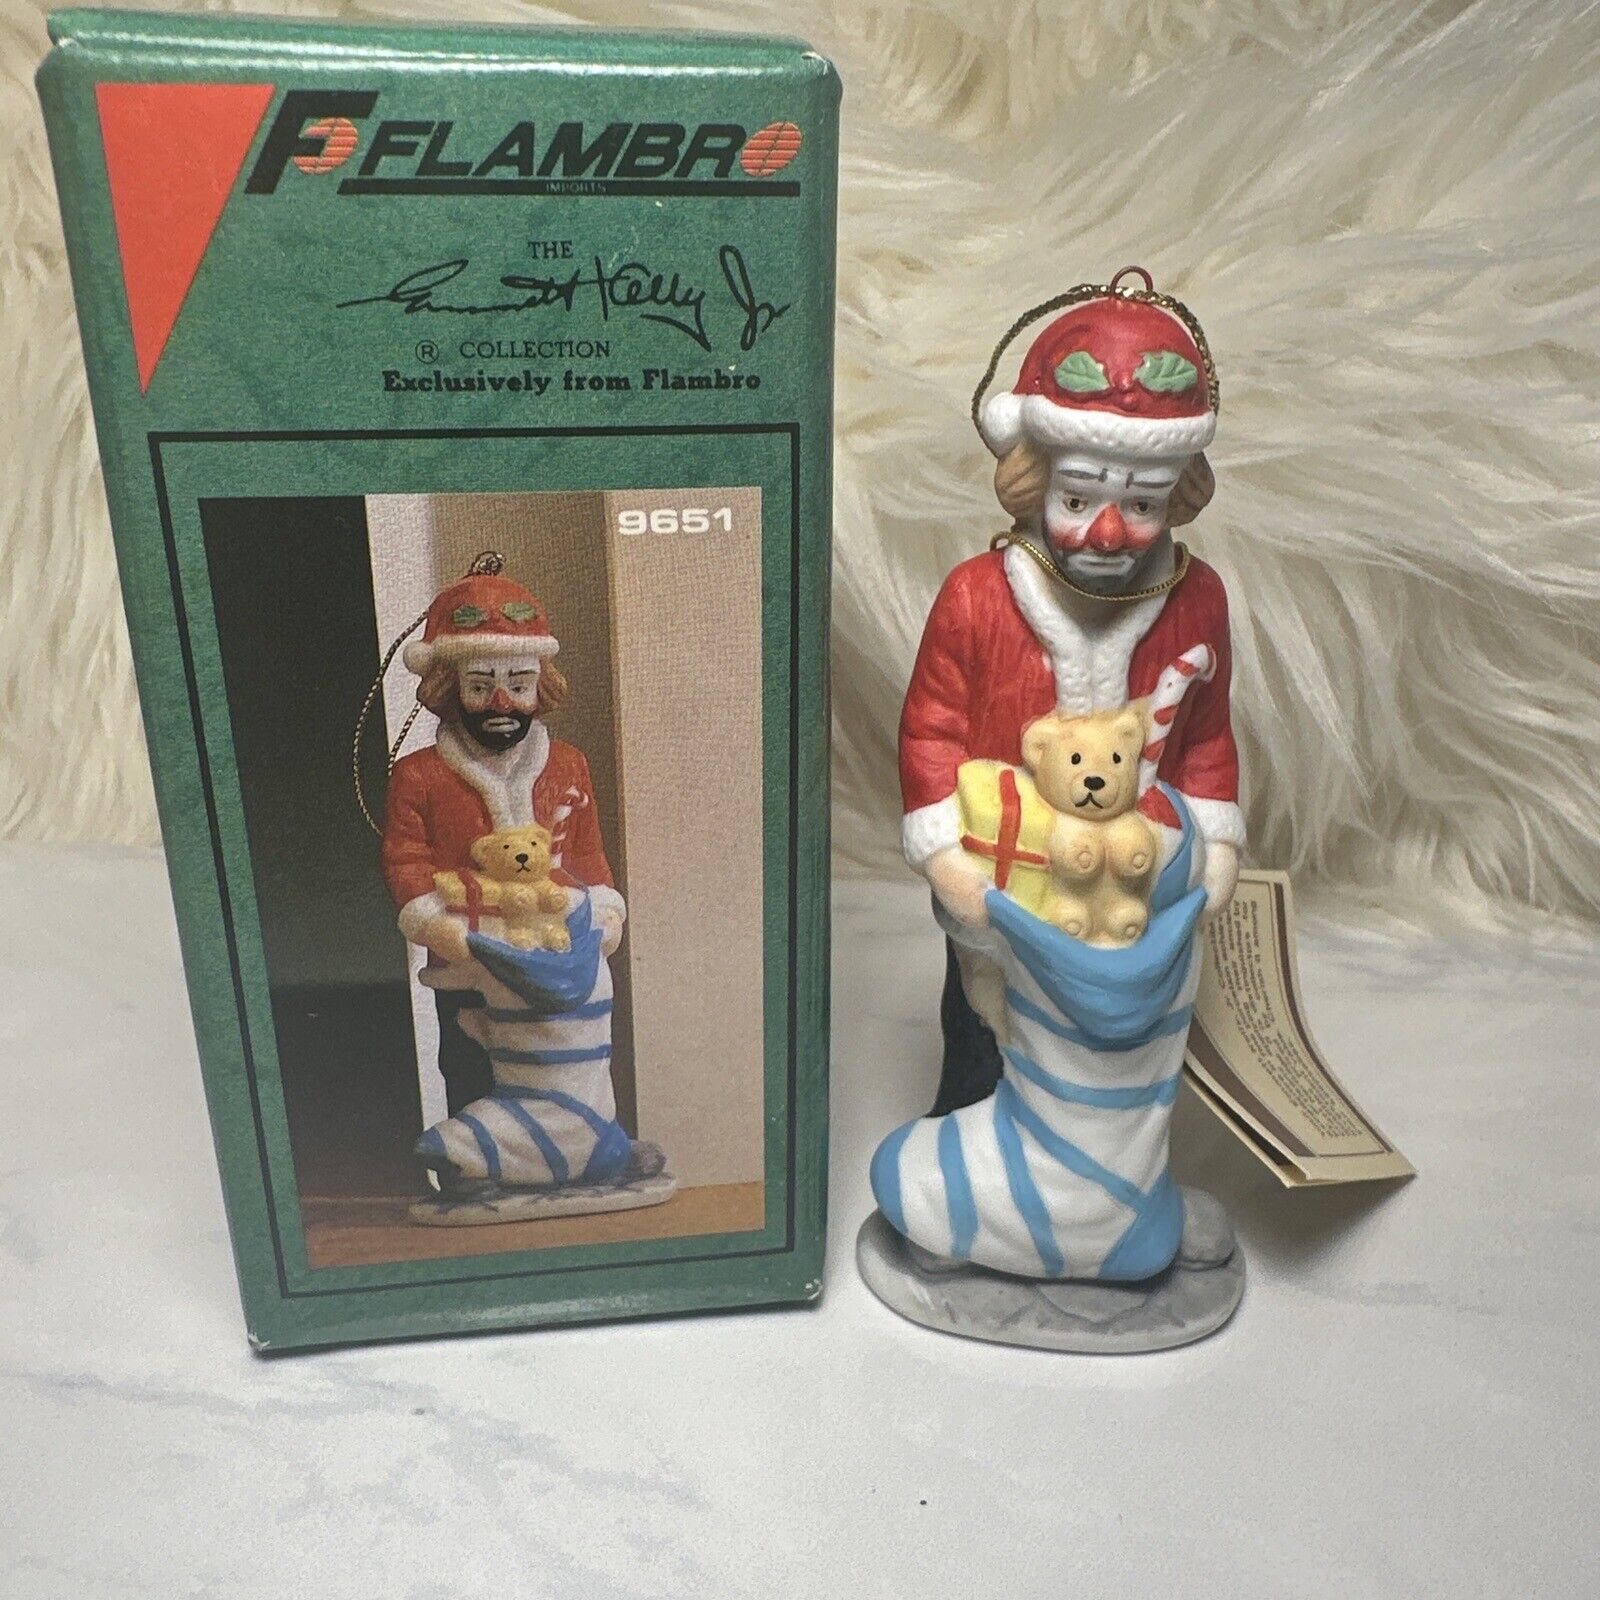 1988 Flambro The Emmett Kelly Jr Signature Collection Porcelain Christmas 9651